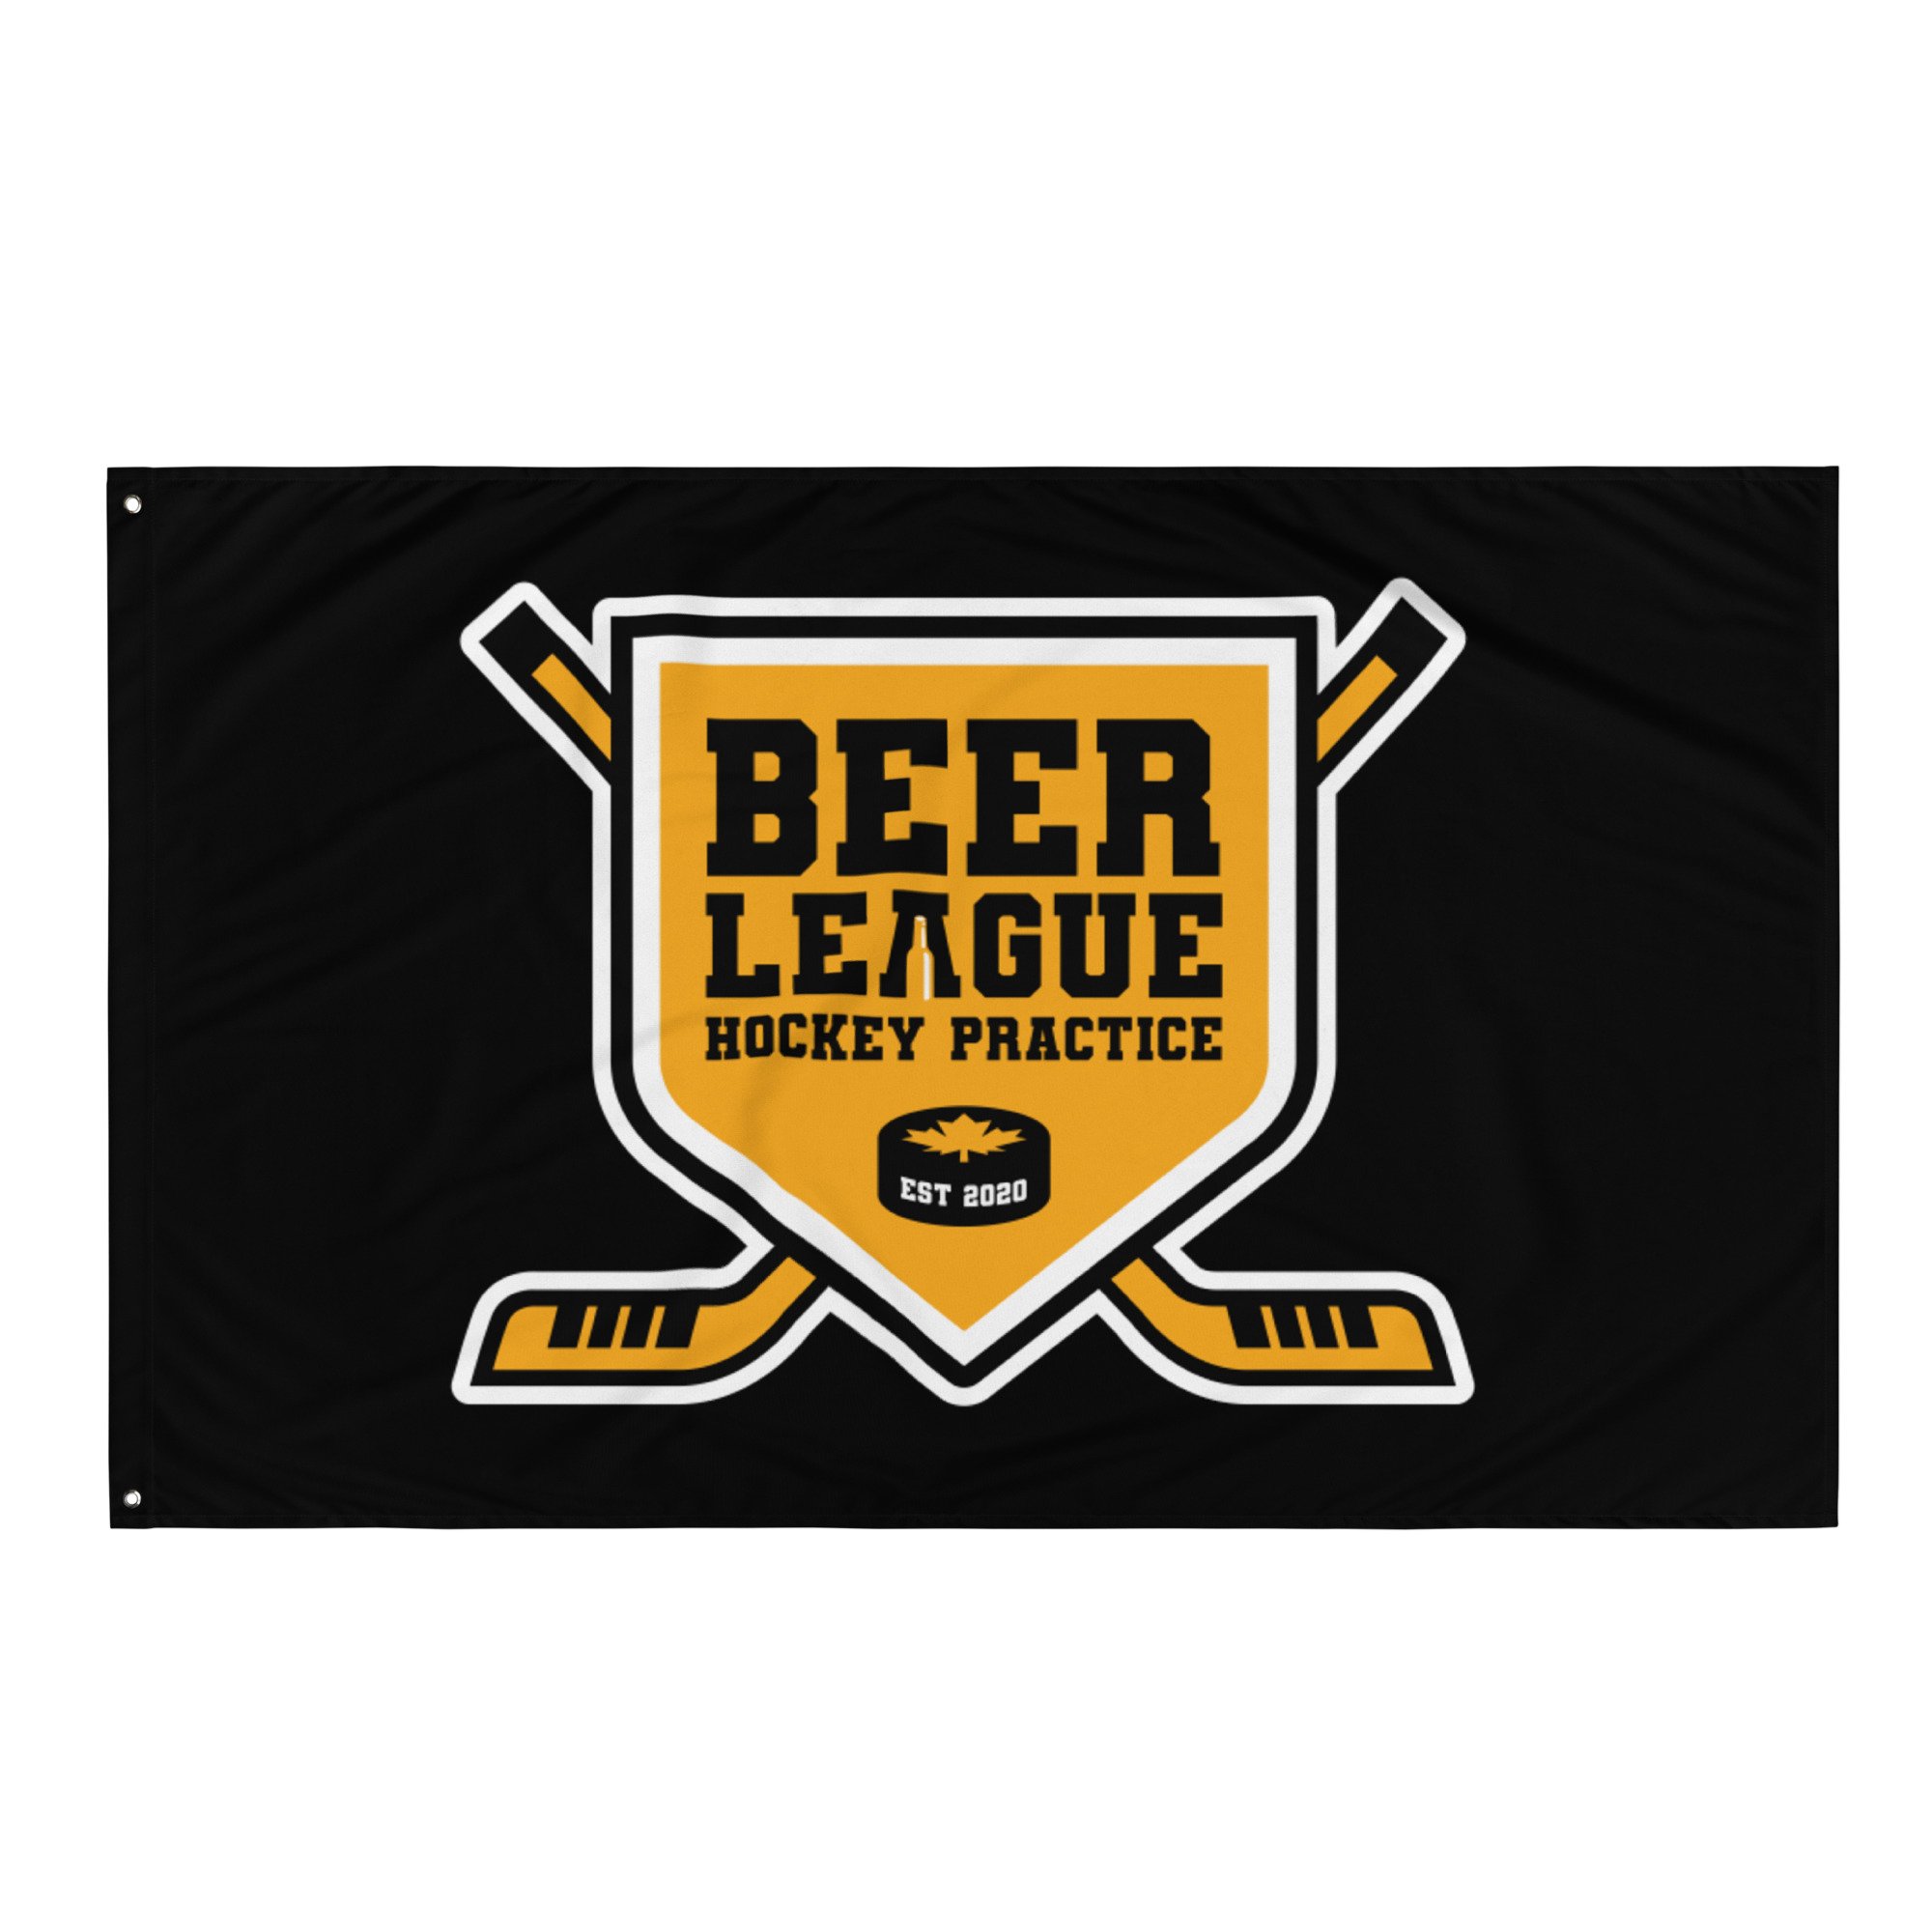 Beer League Hockey Practice